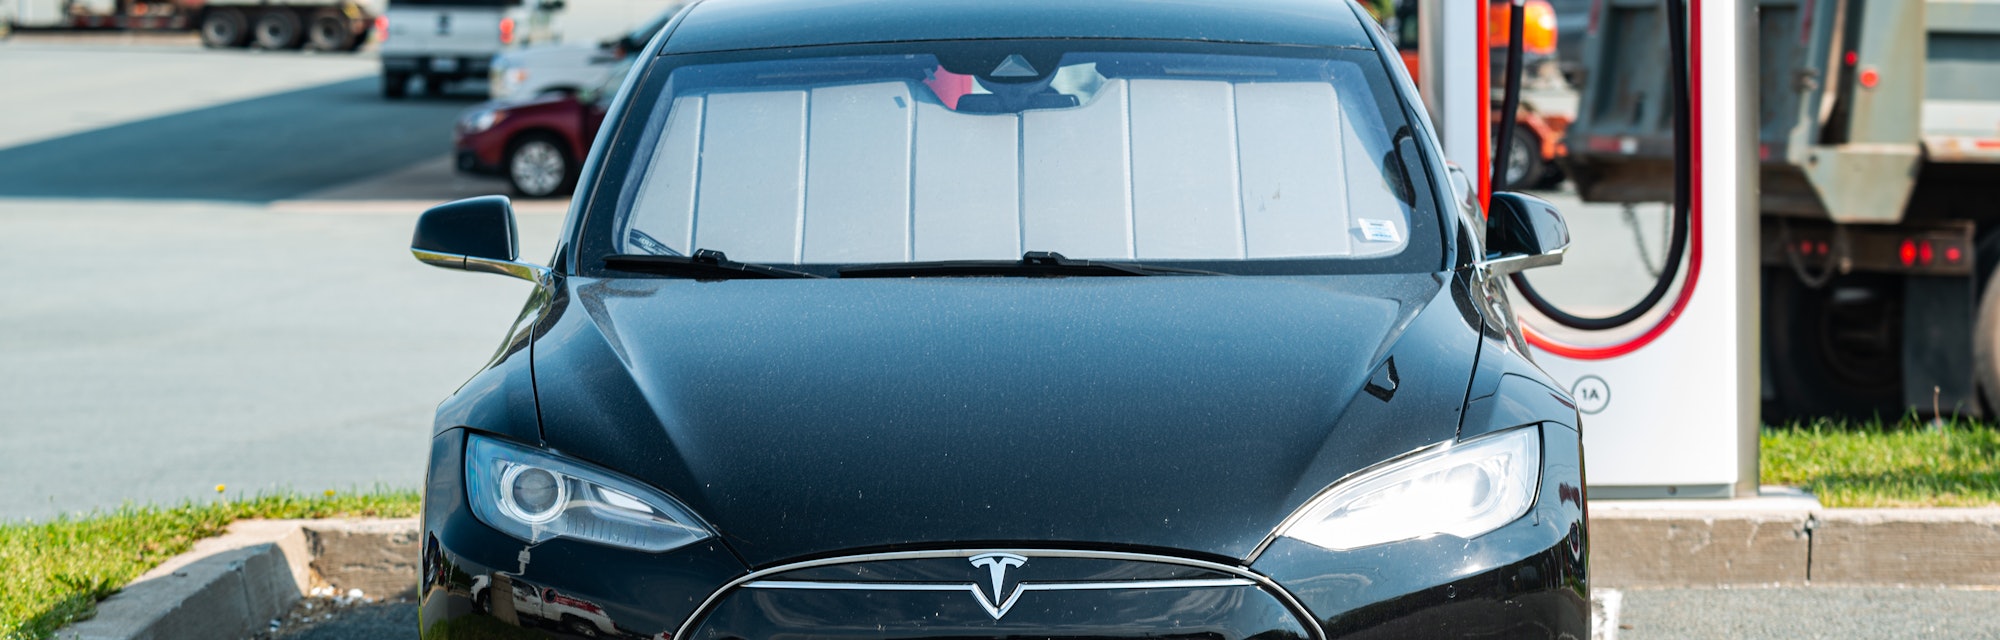 Enfield, Canada - June 7, 2021 - A Tesla Model S sedan at a Supercharger charging terminal at a gas ...